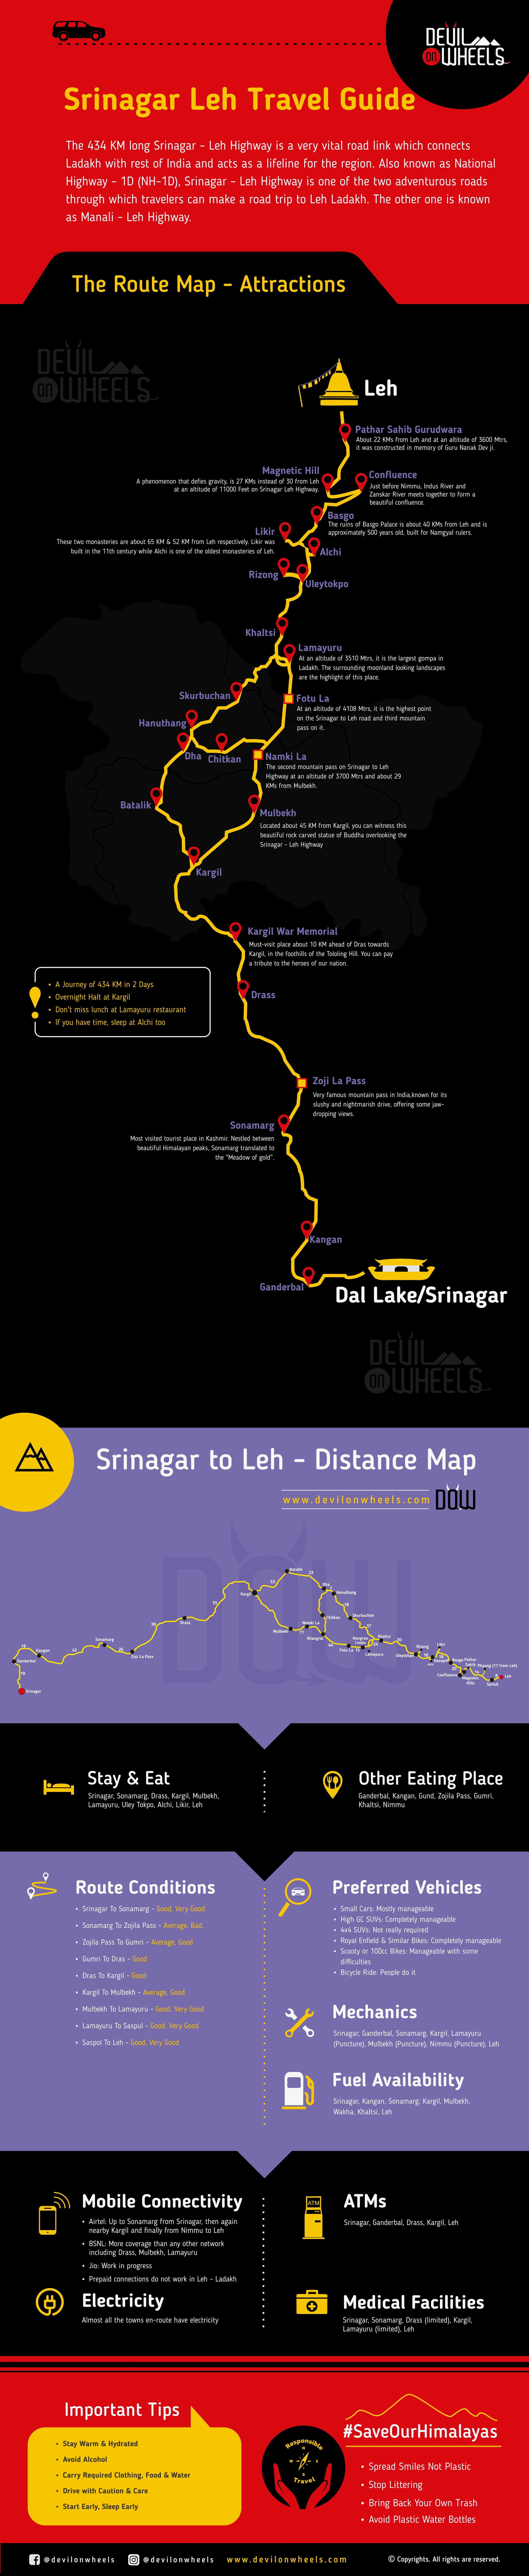 Srinagar Leh Highway Travel Guide – Detailed & Complete
